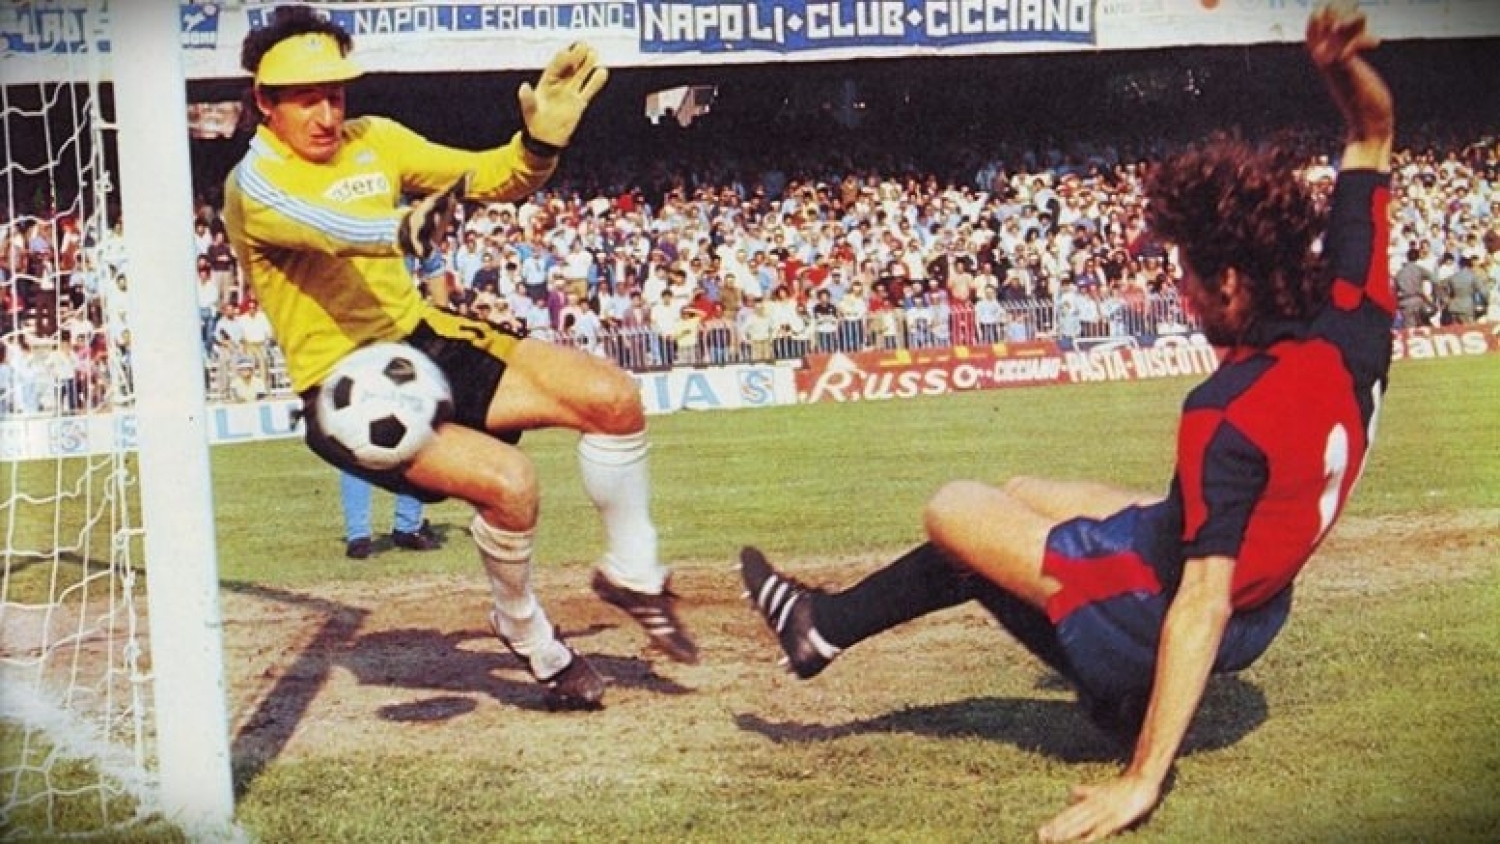 Accadde oggi: Napoli-Genoa 2-2 (16/5/1982)